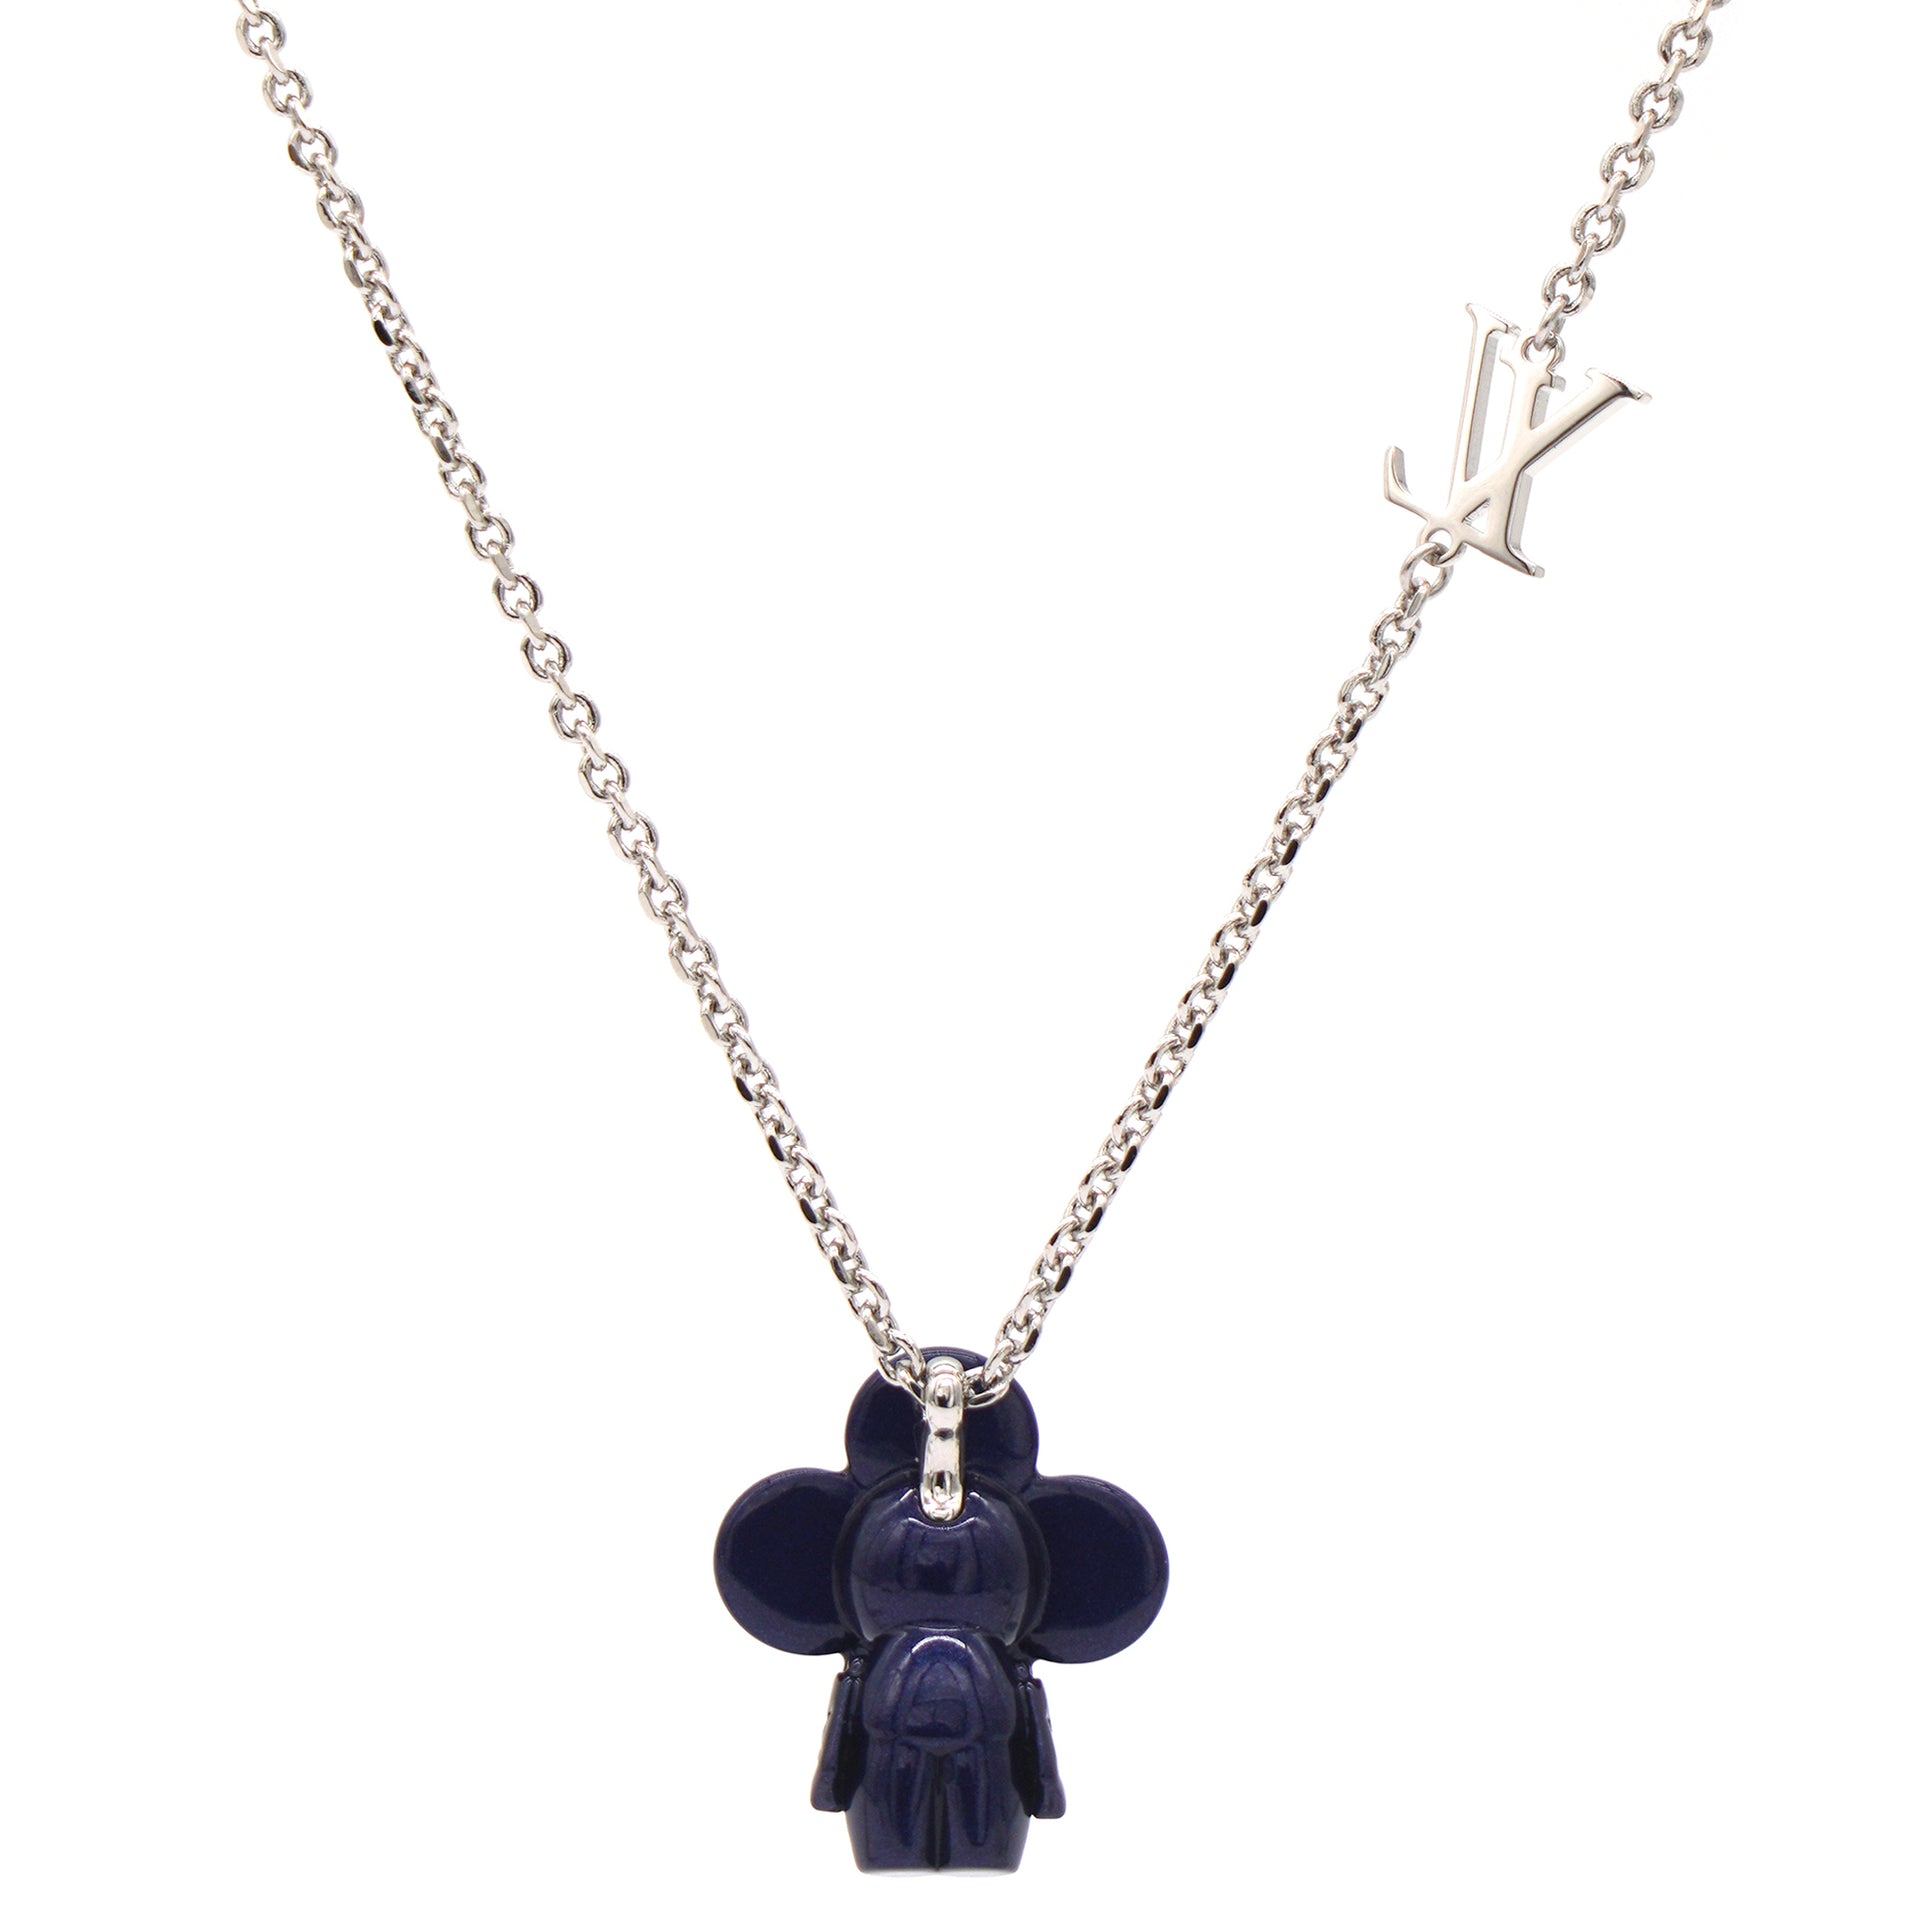 Louis Vuitton Mickey necklace